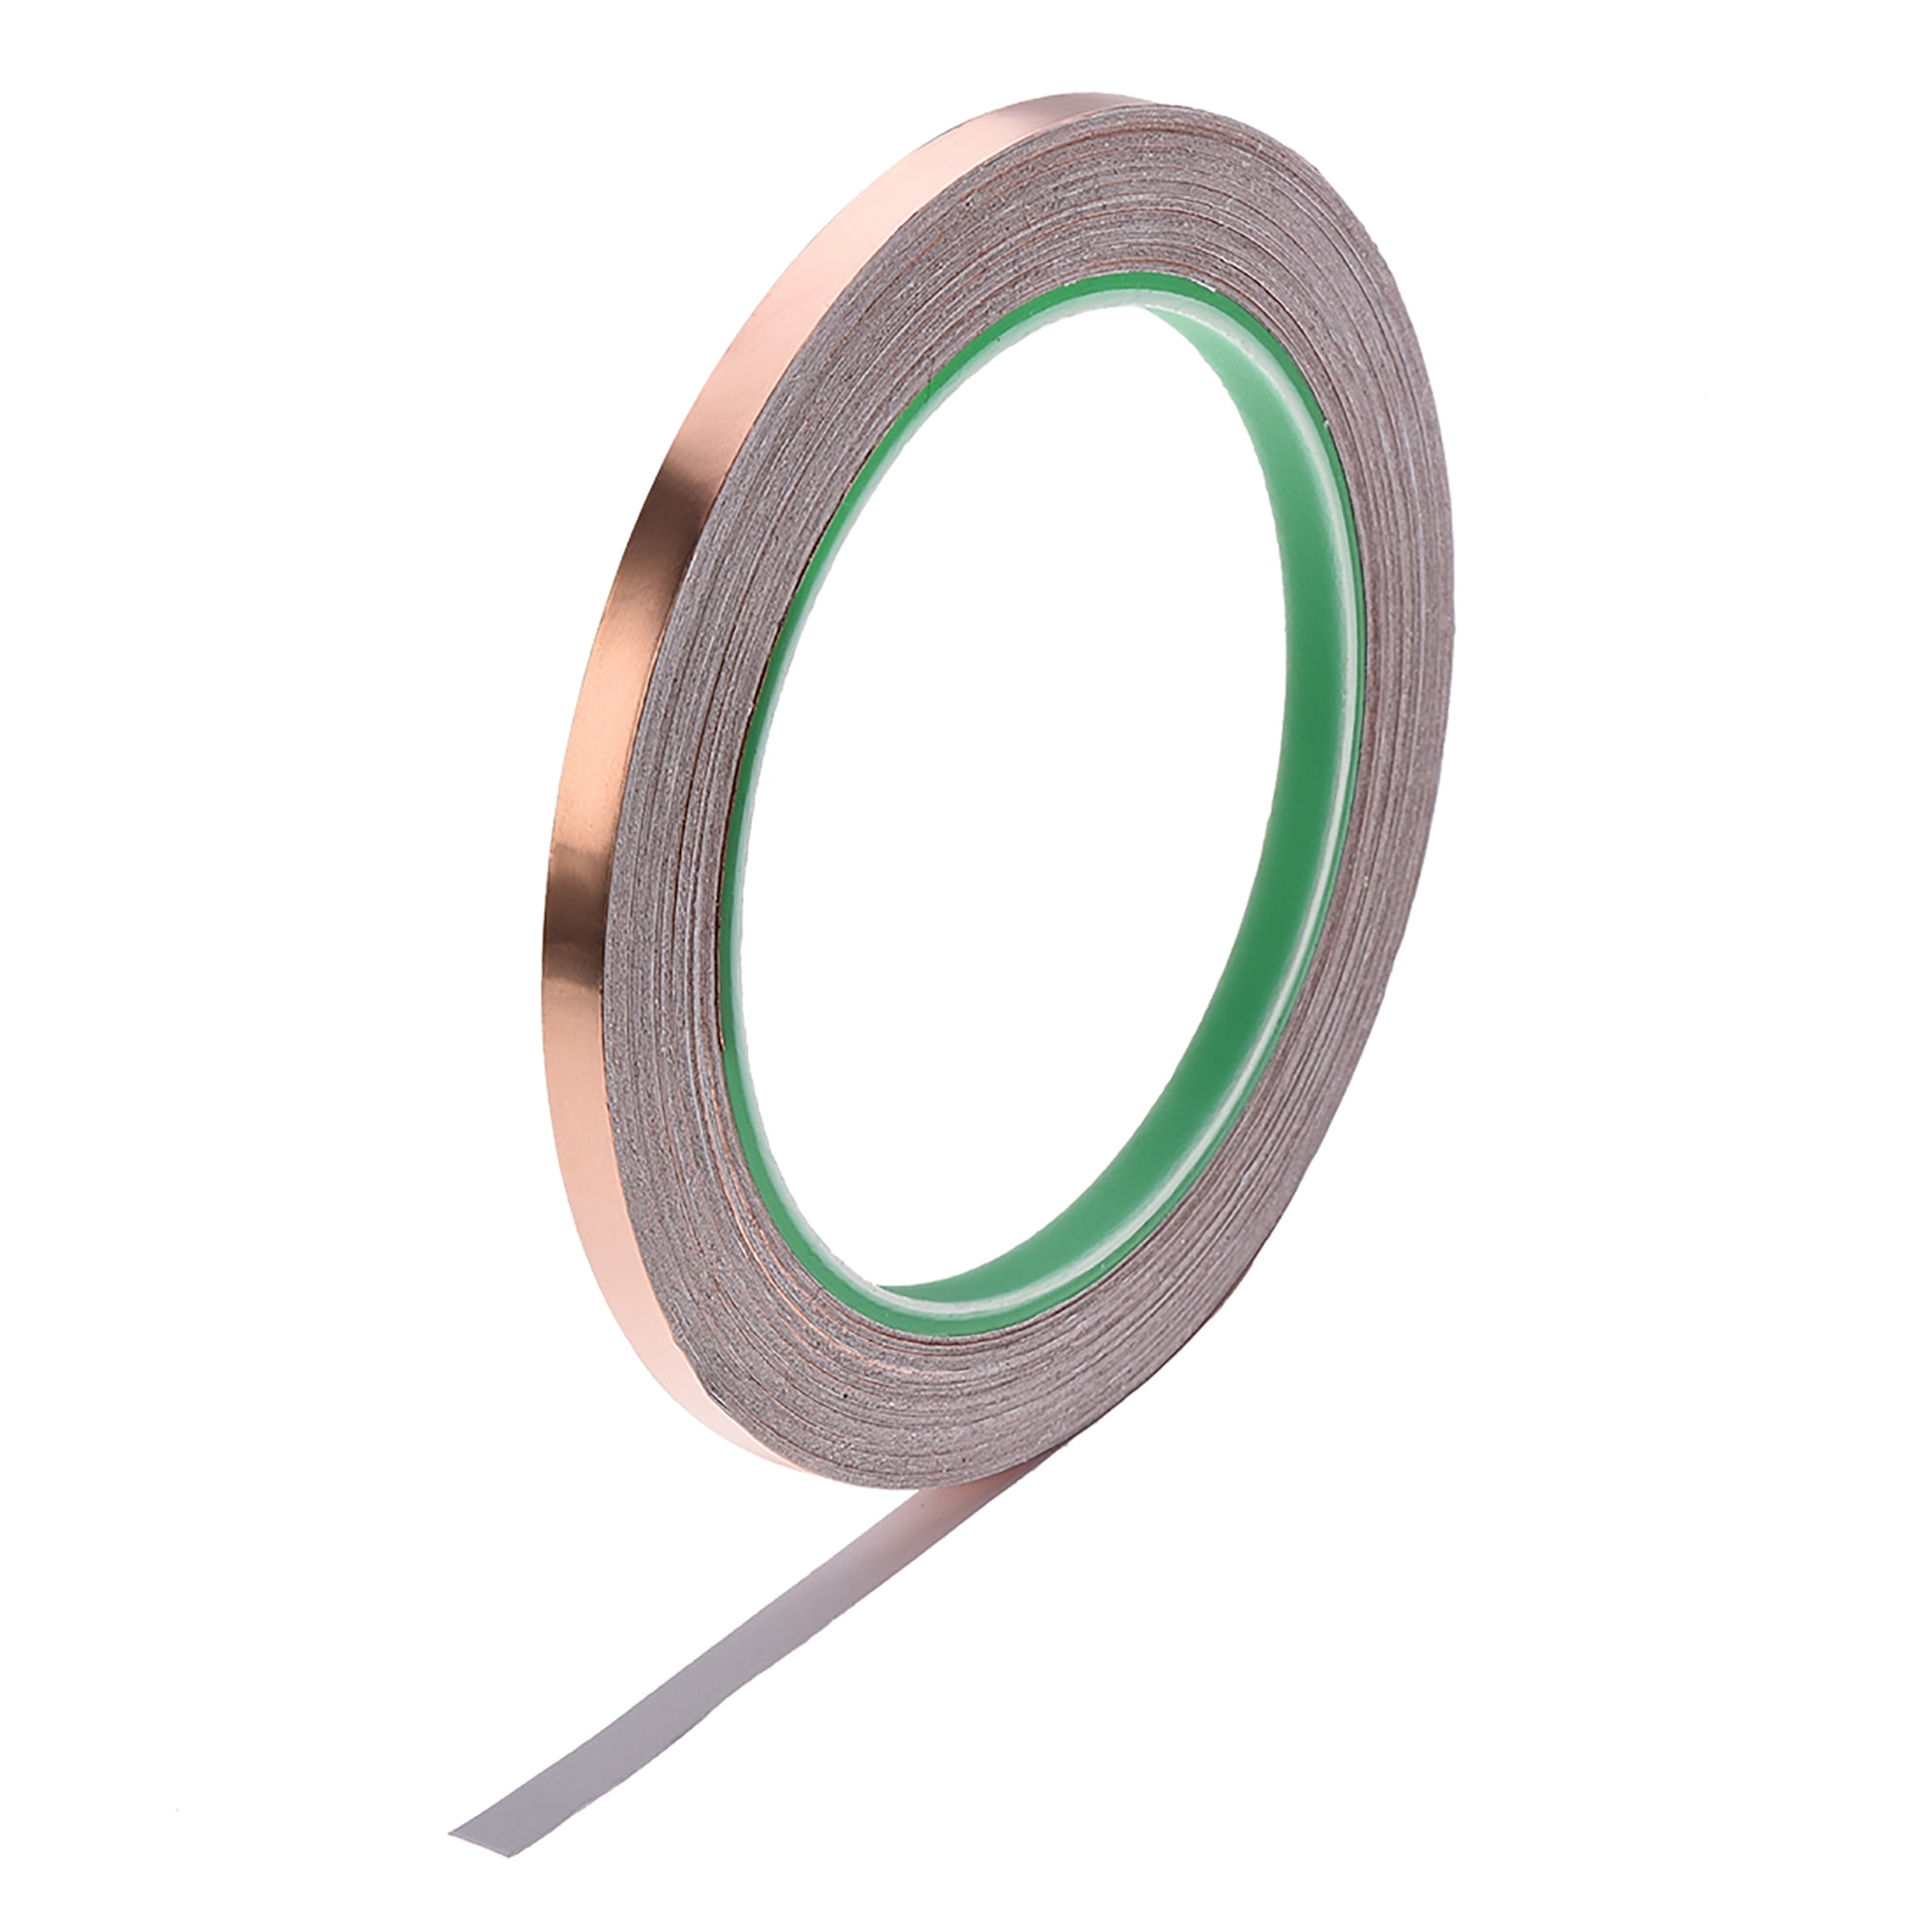 conductive copper adhesive tape-conductive copper tape lowes